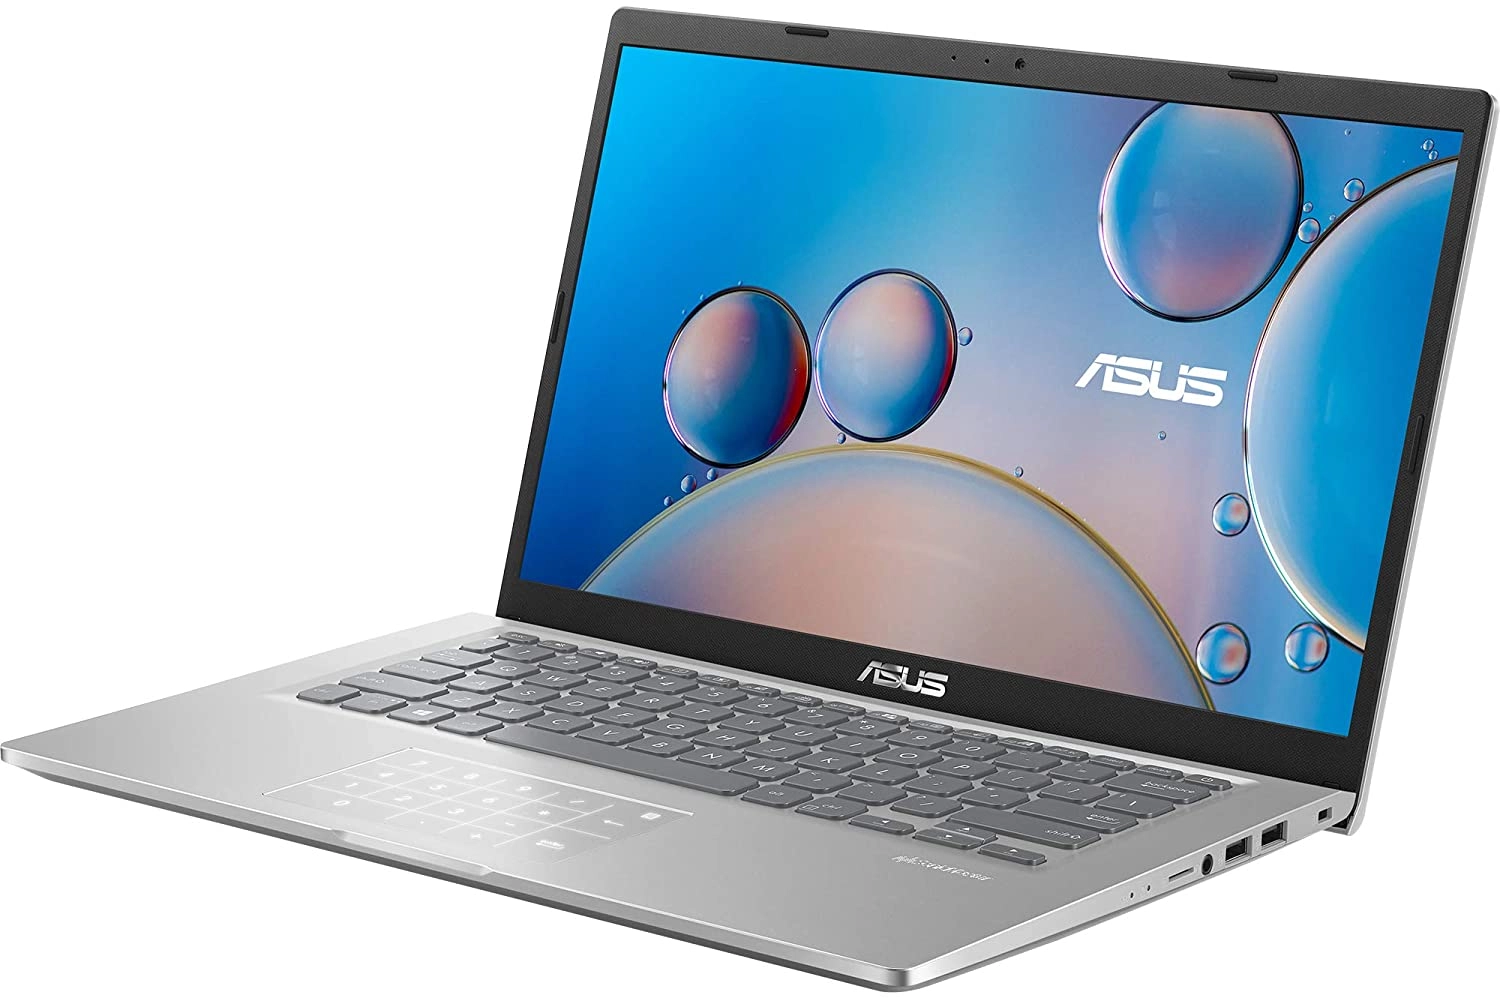 Asus F415JA-EK398T laptop image